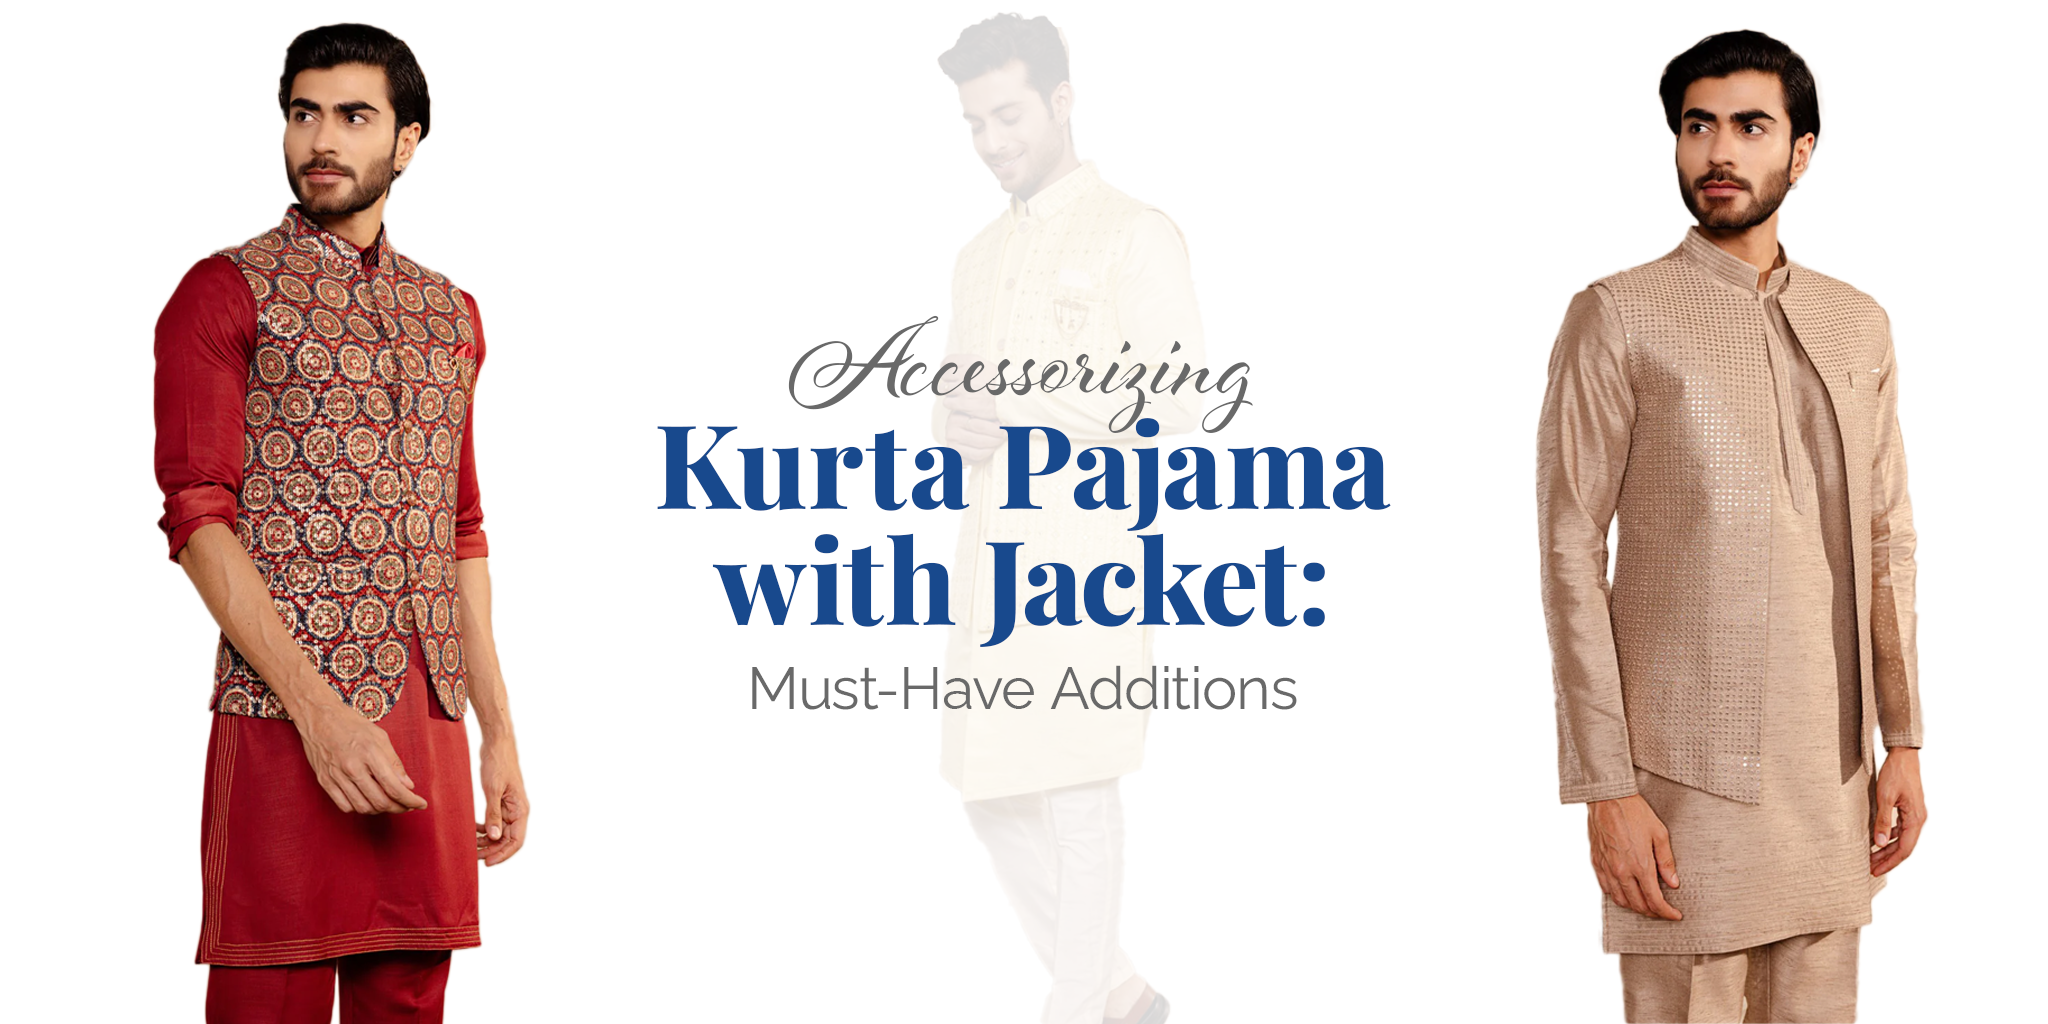 Accessorizing Kurta Pajama with Jacket: Must-Have Additions